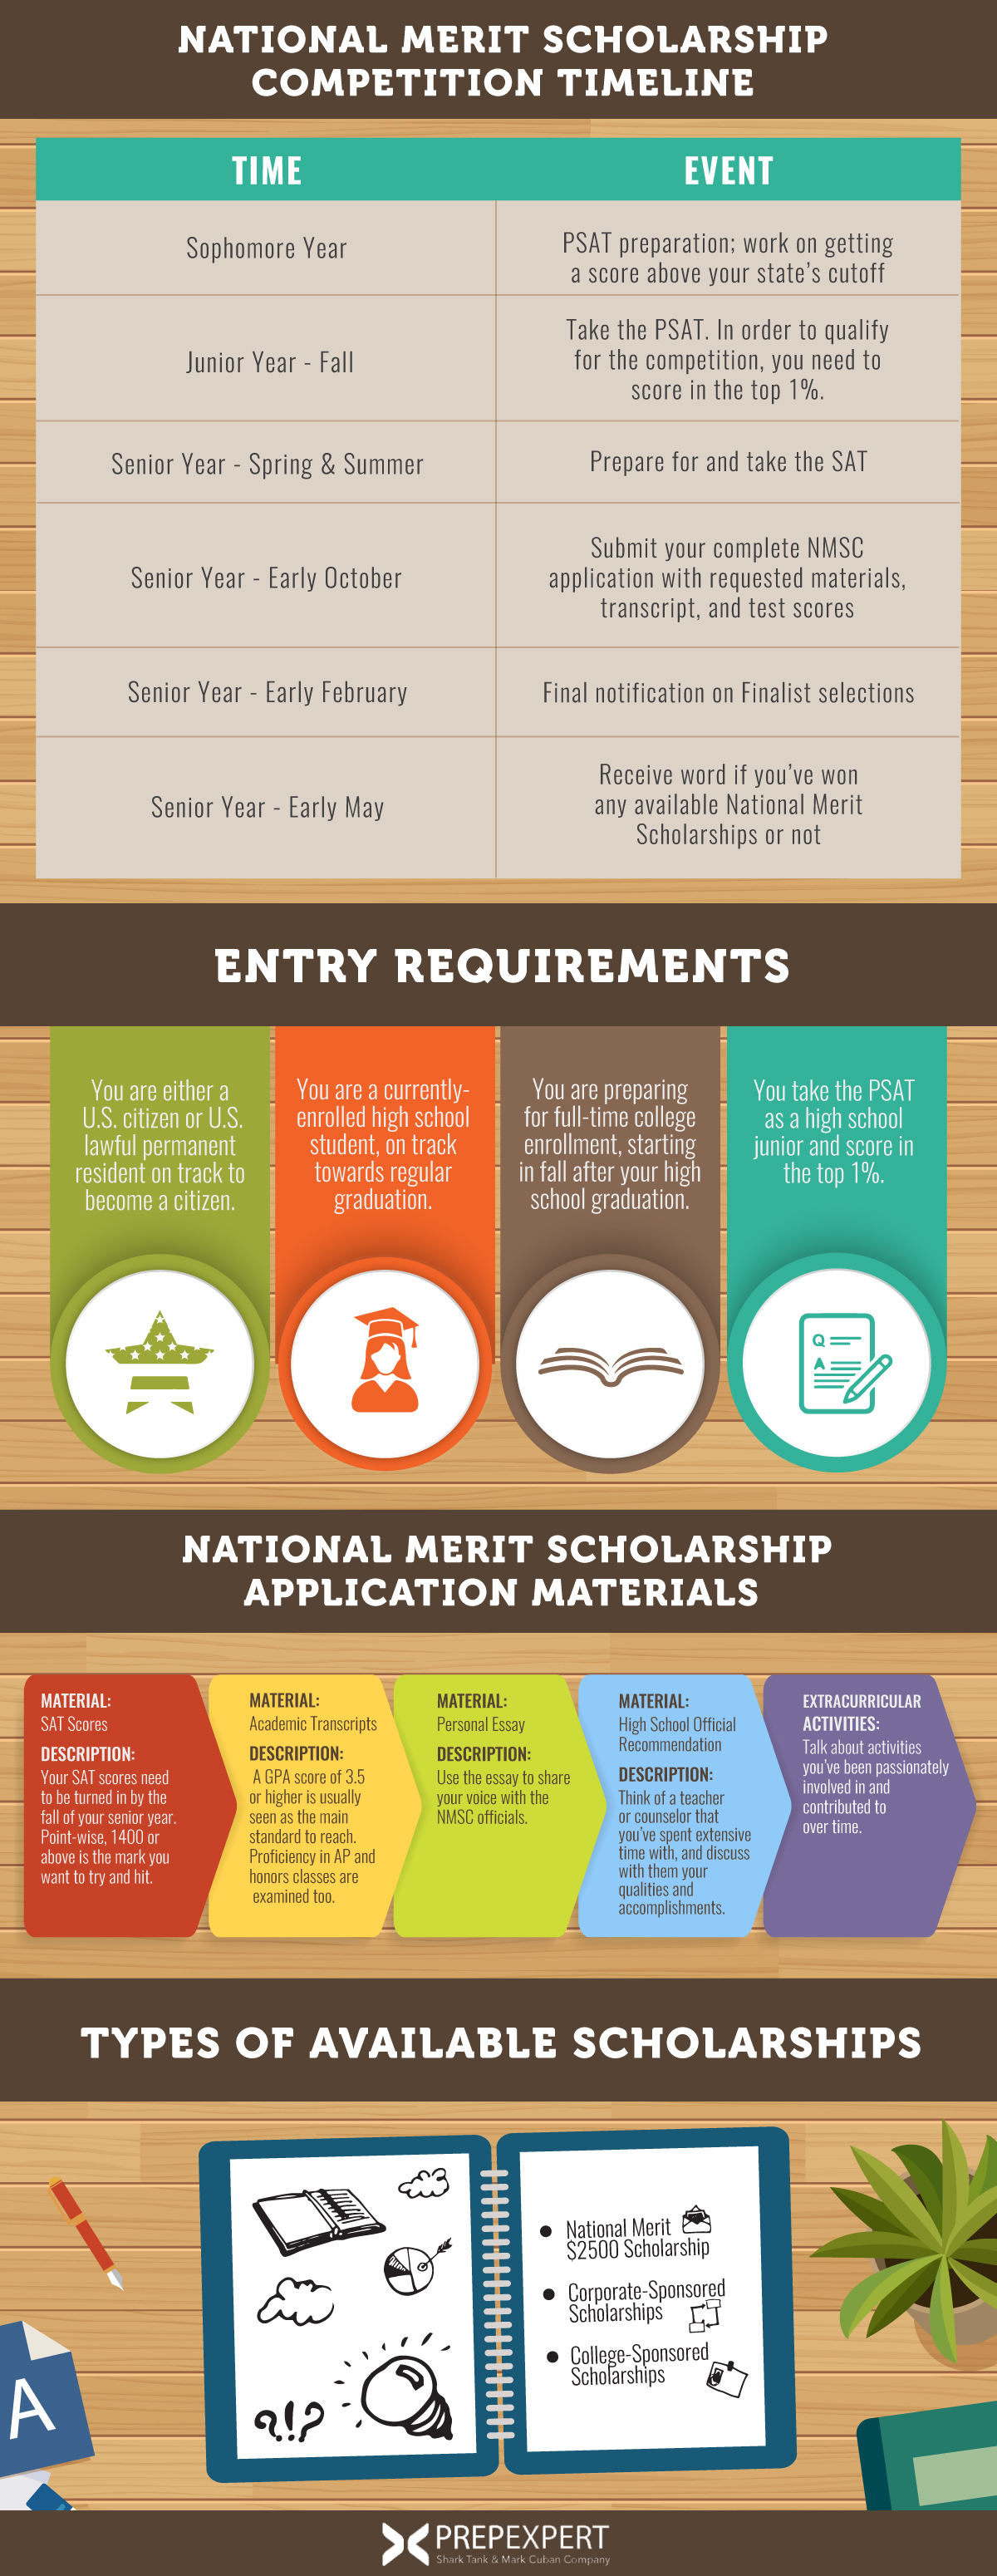 national merit scholarship